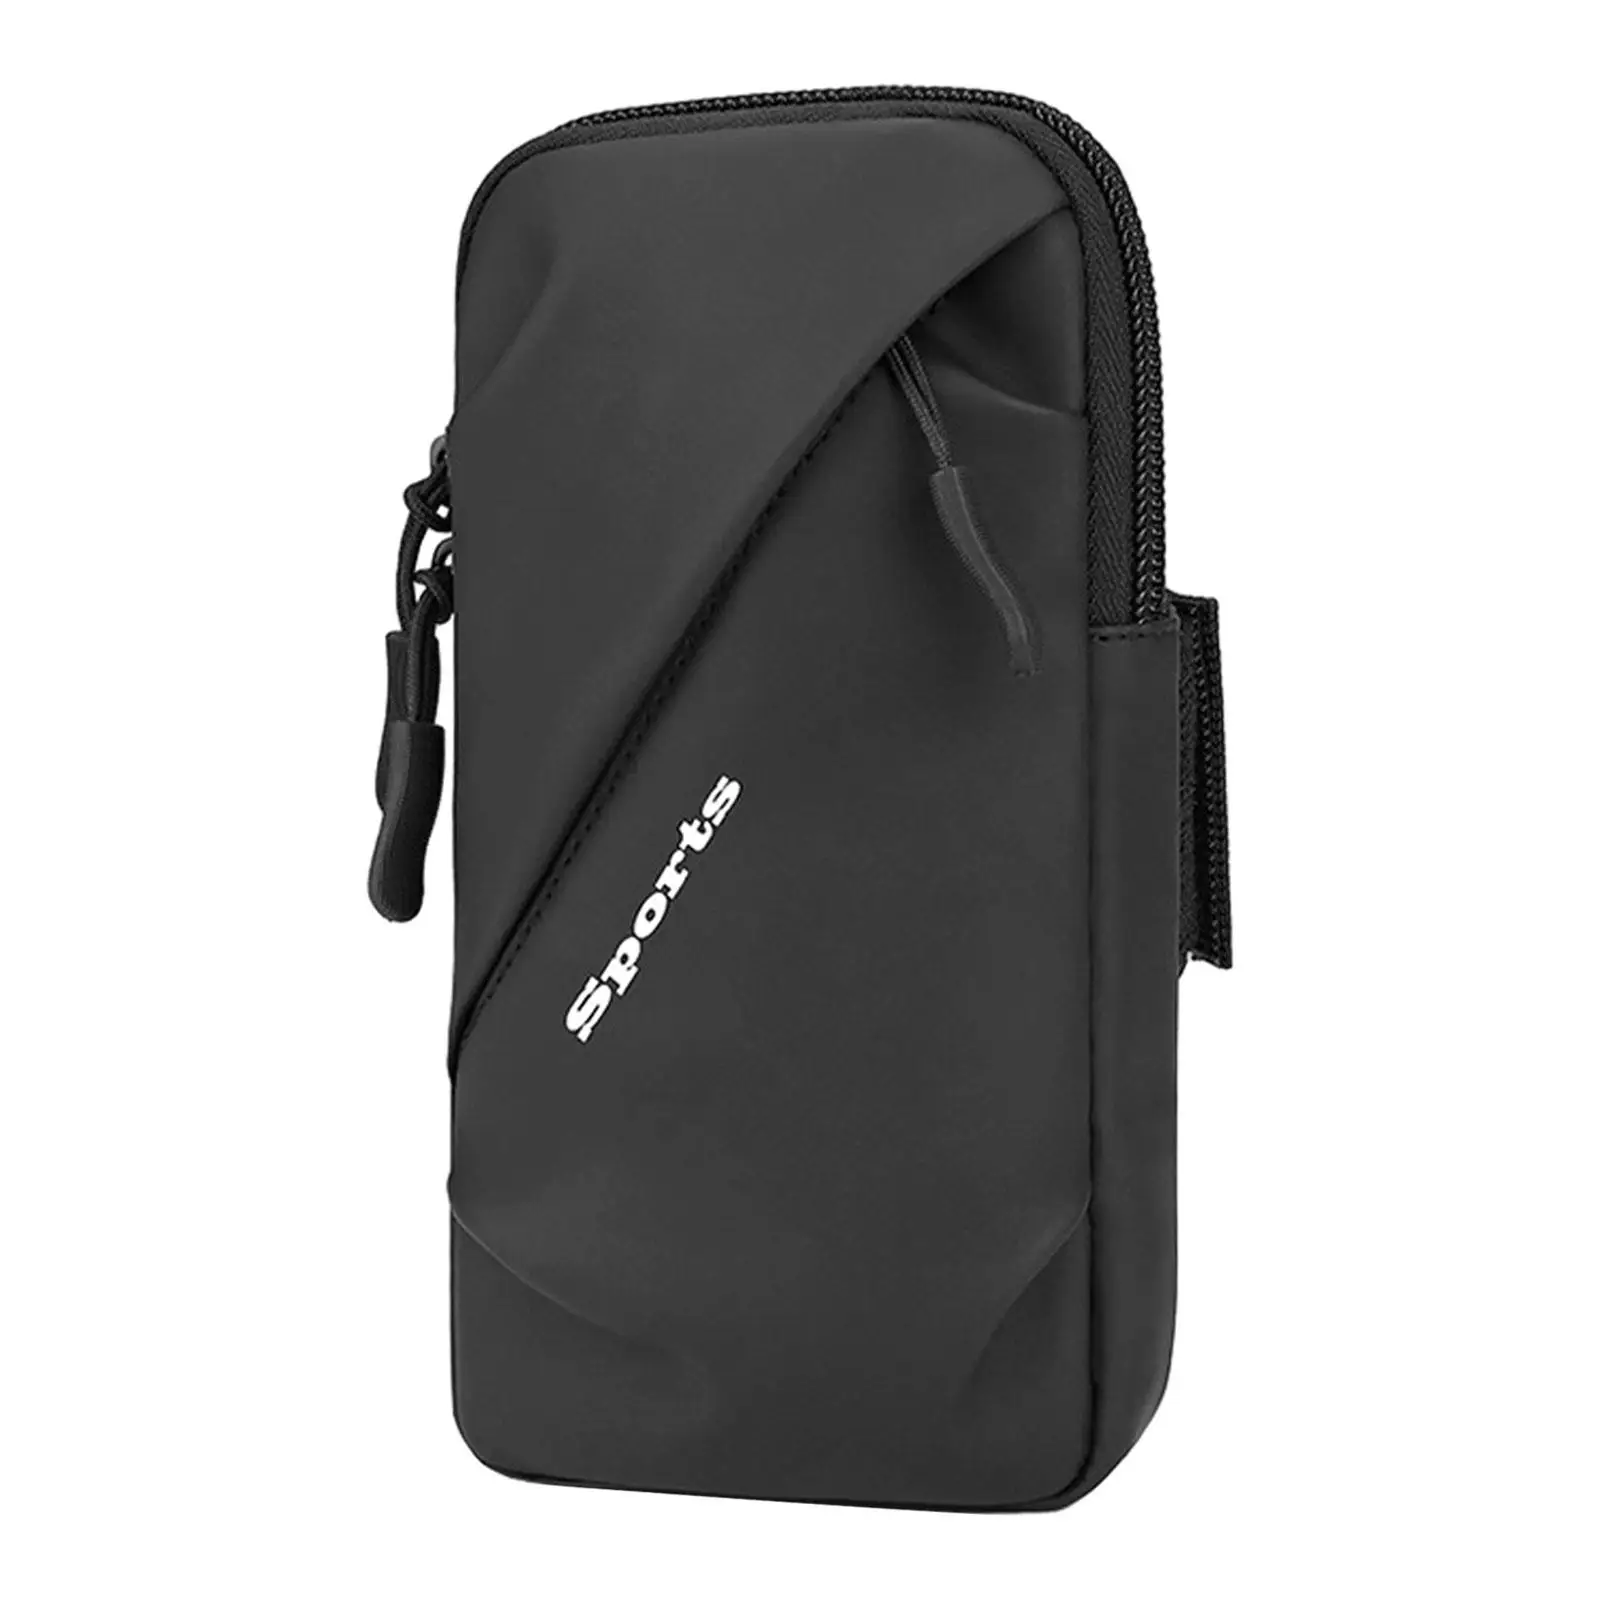 Phone Arm Band Bag Phone Holder Pouch Case Cellphone Holder Women Men Gym Armbands Bag for Running Workout Sport Walking